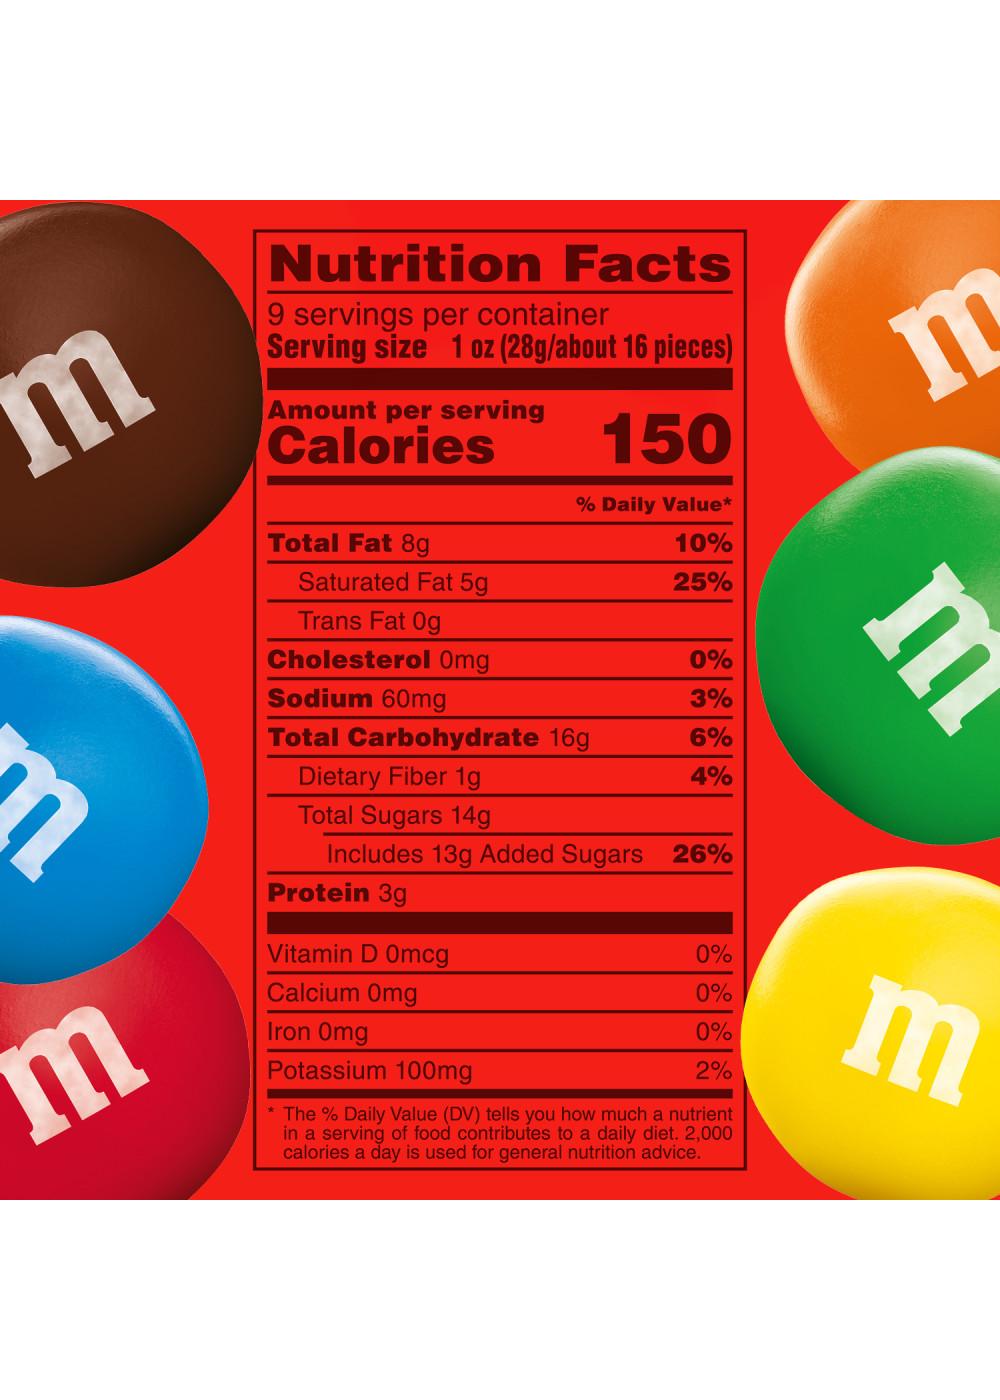 Peanut butter chocolate candies - M&M's